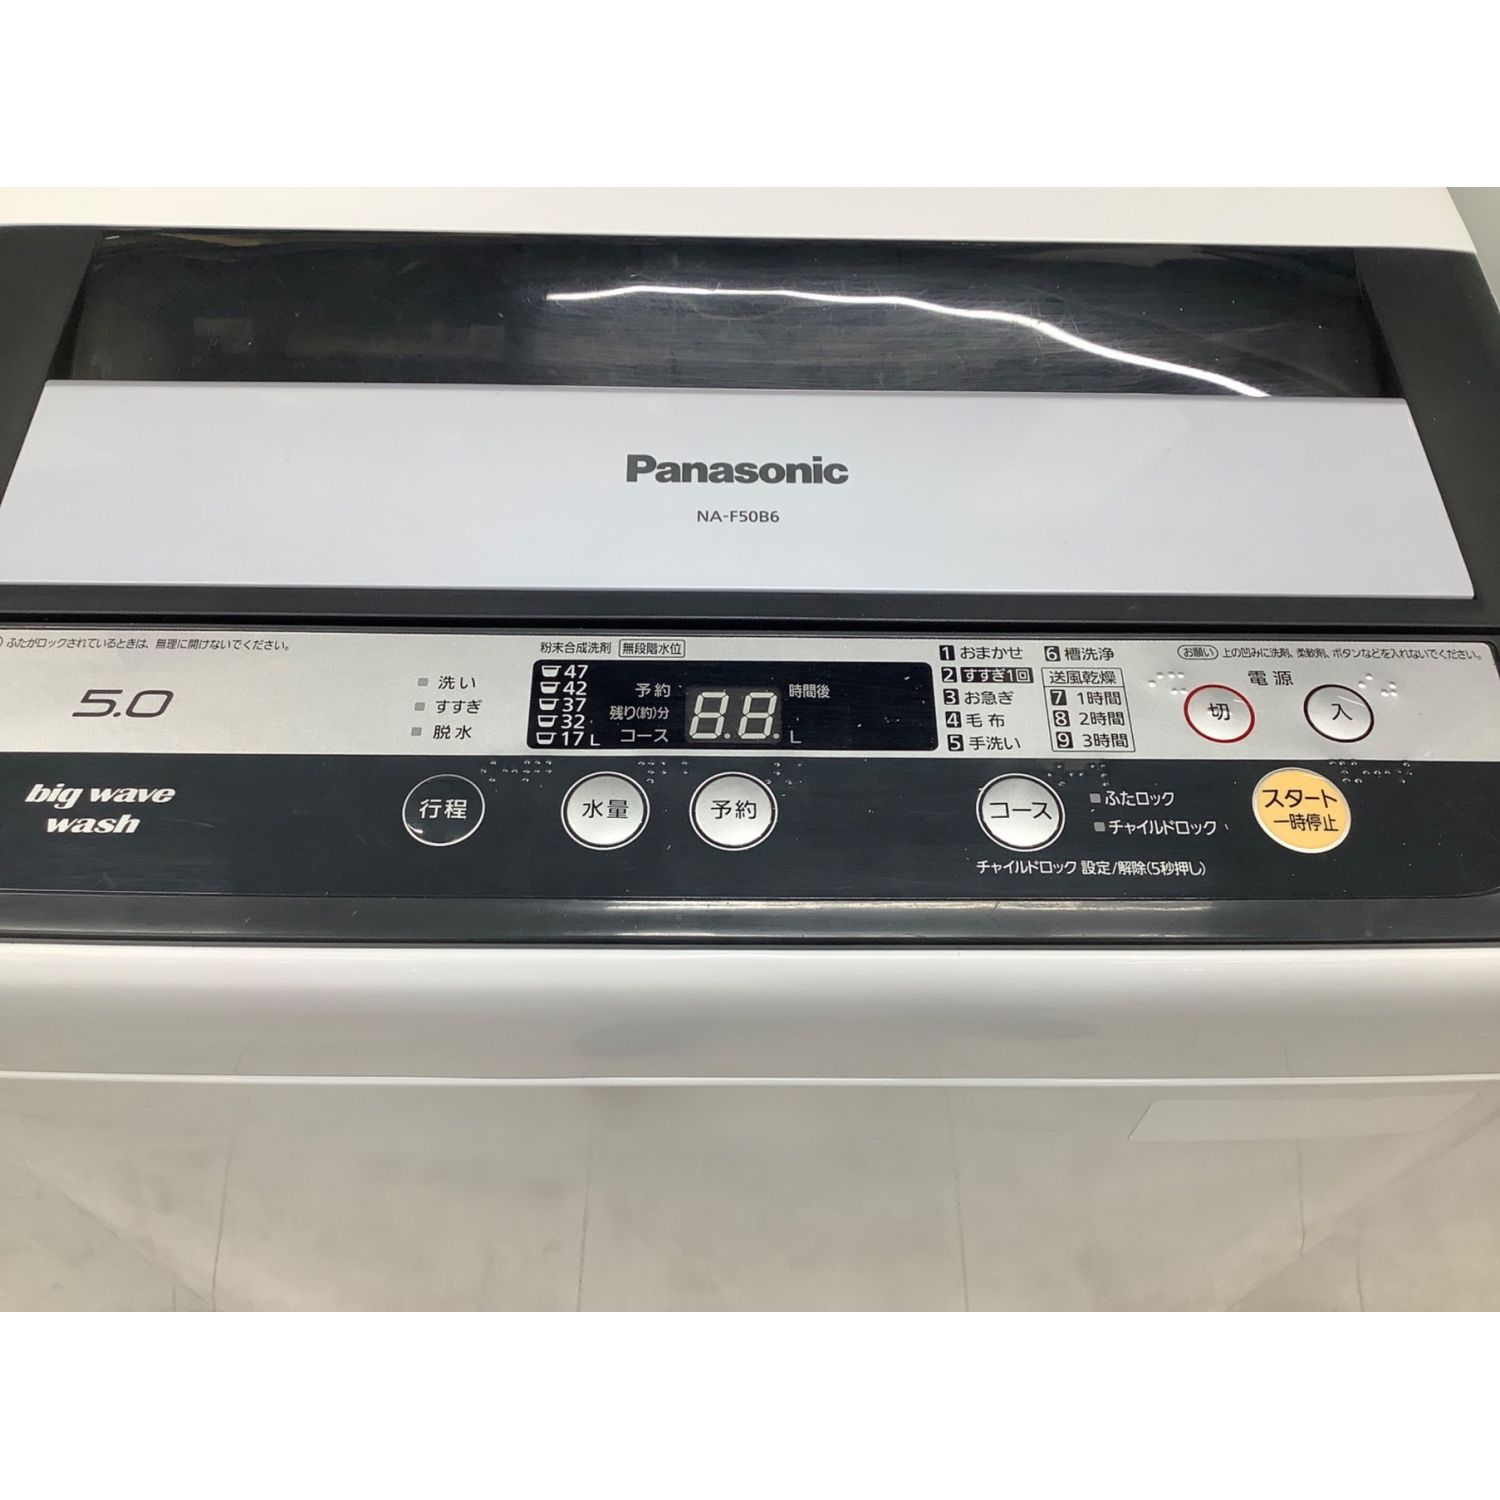 Panasonic (パナソニック) 全自動洗濯機 160 5.0kg NA-F50B6 2013年製 